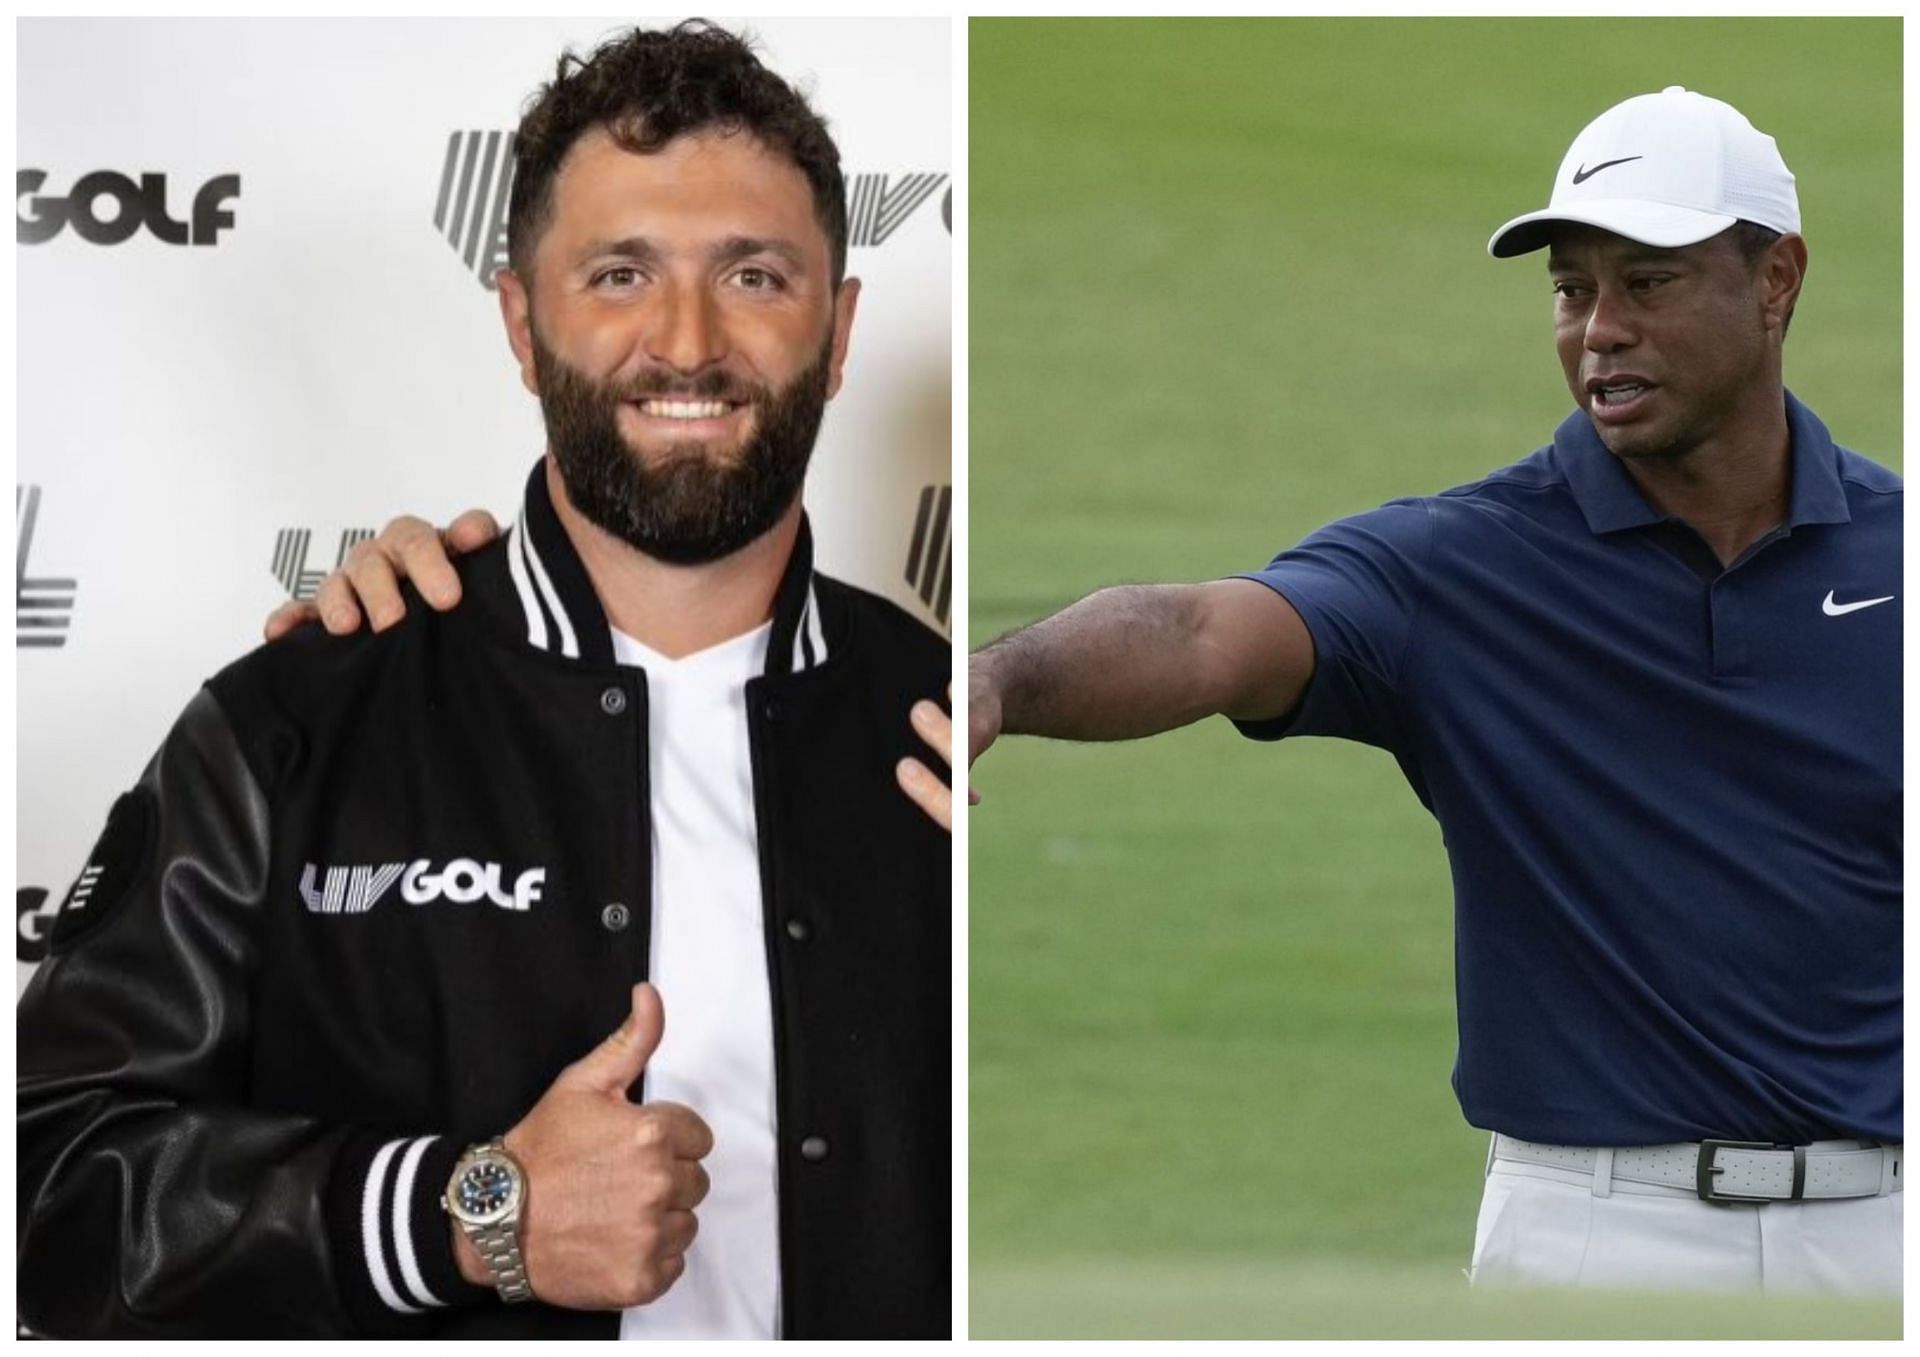 Tiger Woods react to Jon Rahm switching to LIV Golf